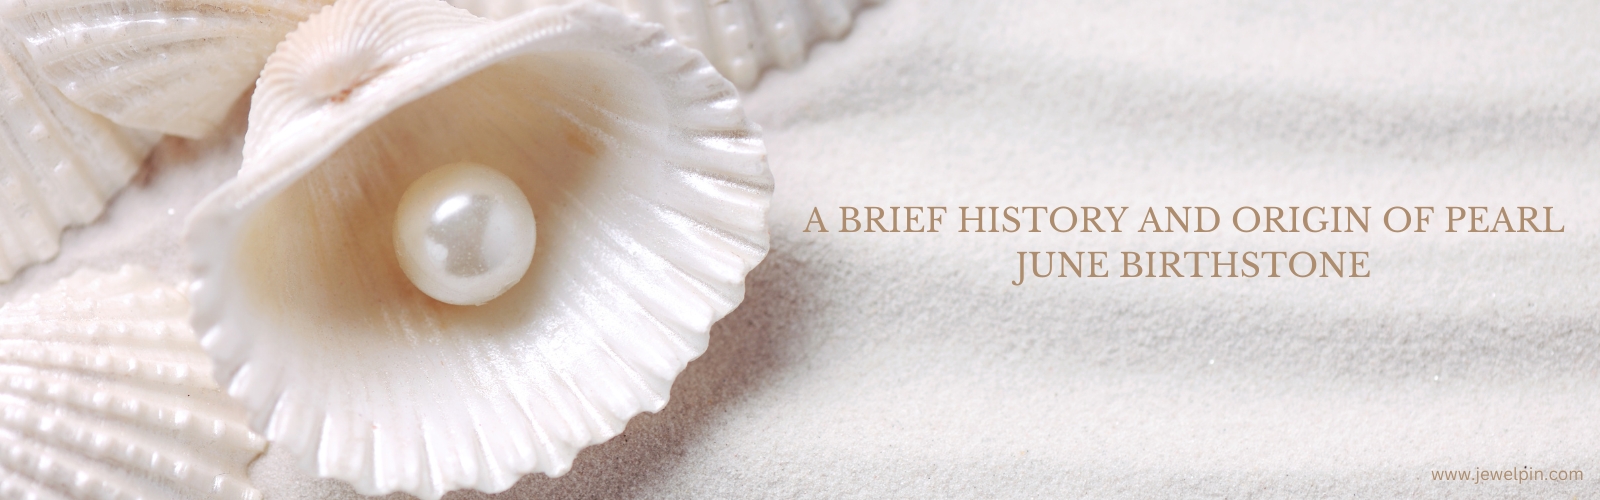 a brief history and origin of pearl june birthstone